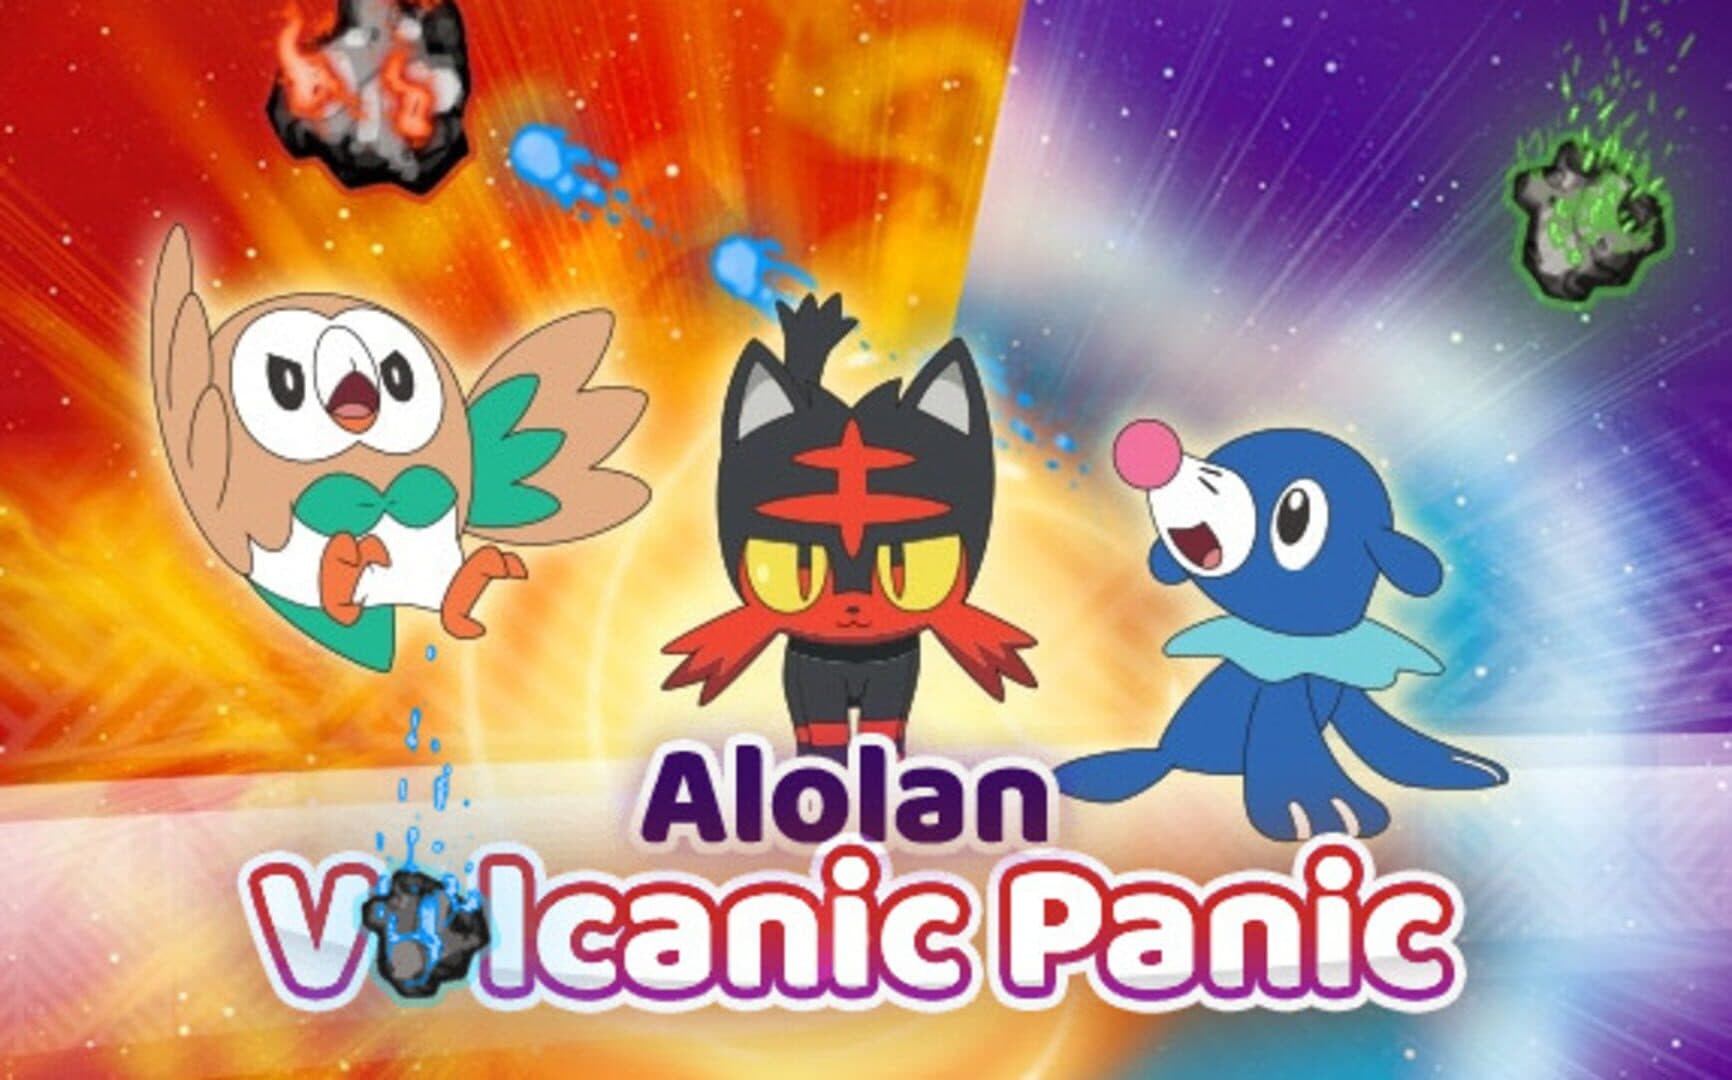 Alolan Volcanic Panic cover art